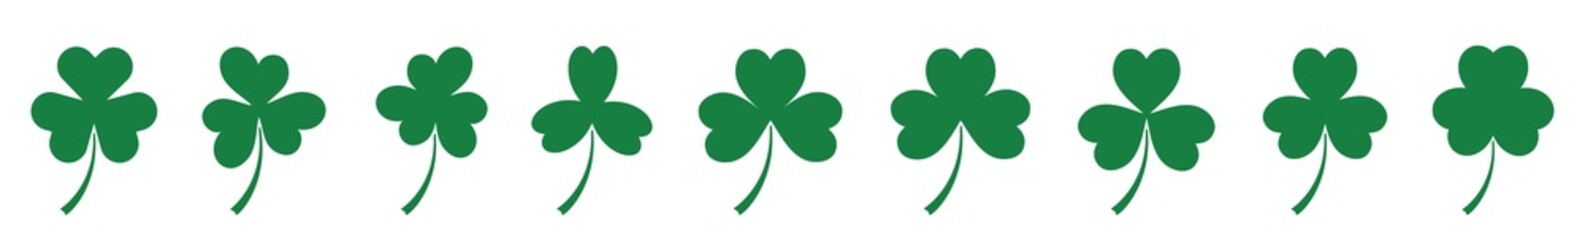 Shamrock Icon Green | Shamrocks | Trefoil | Clover Leaf | Irish Symbol | St Patrick's Day Logo | Luck Sign | Isolated | Variations